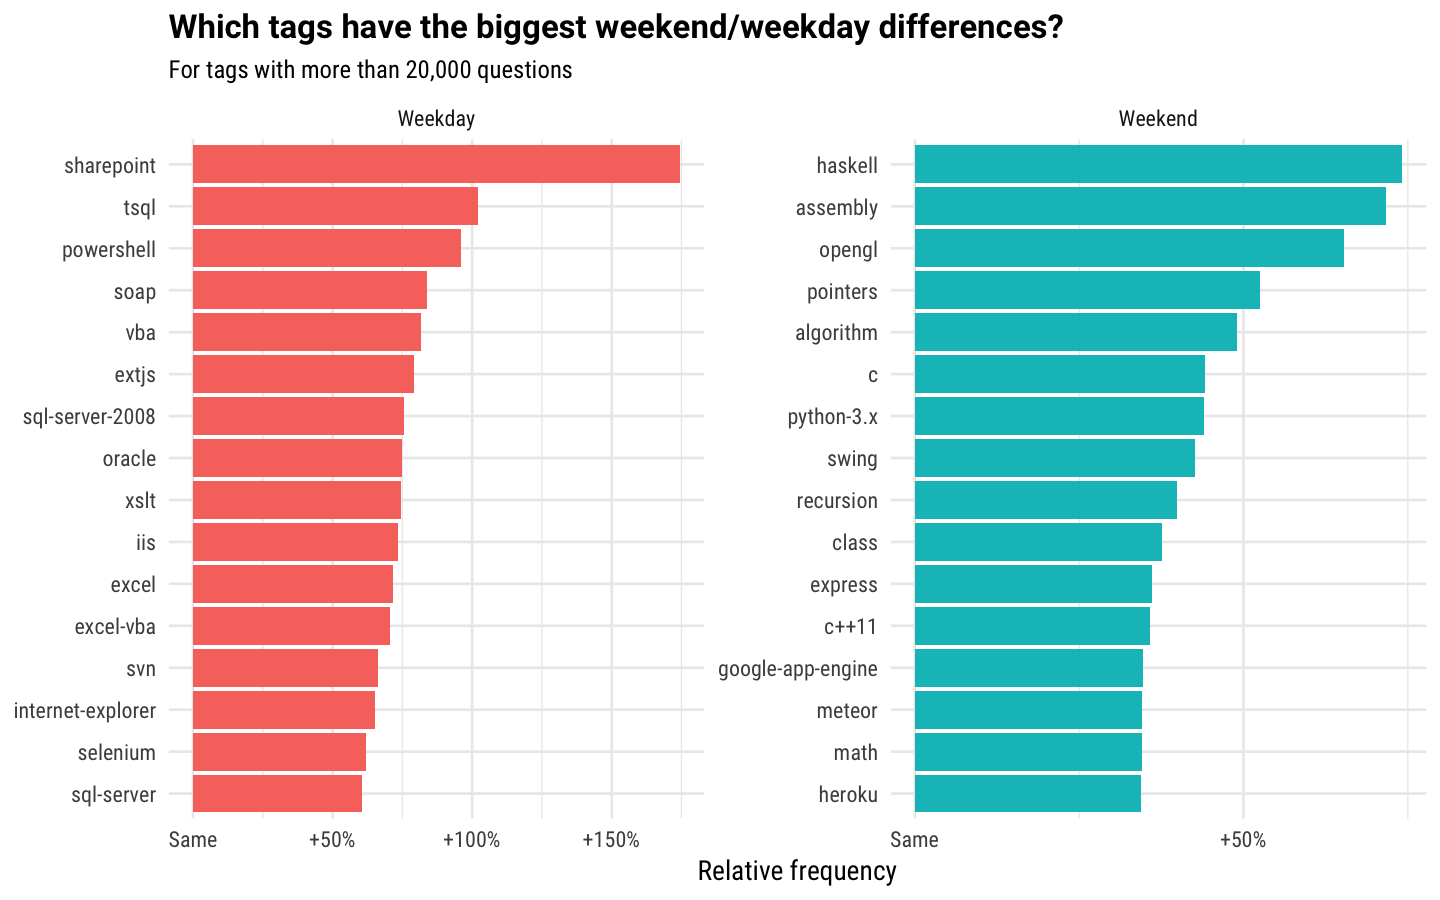 comparing weekends and weekdays